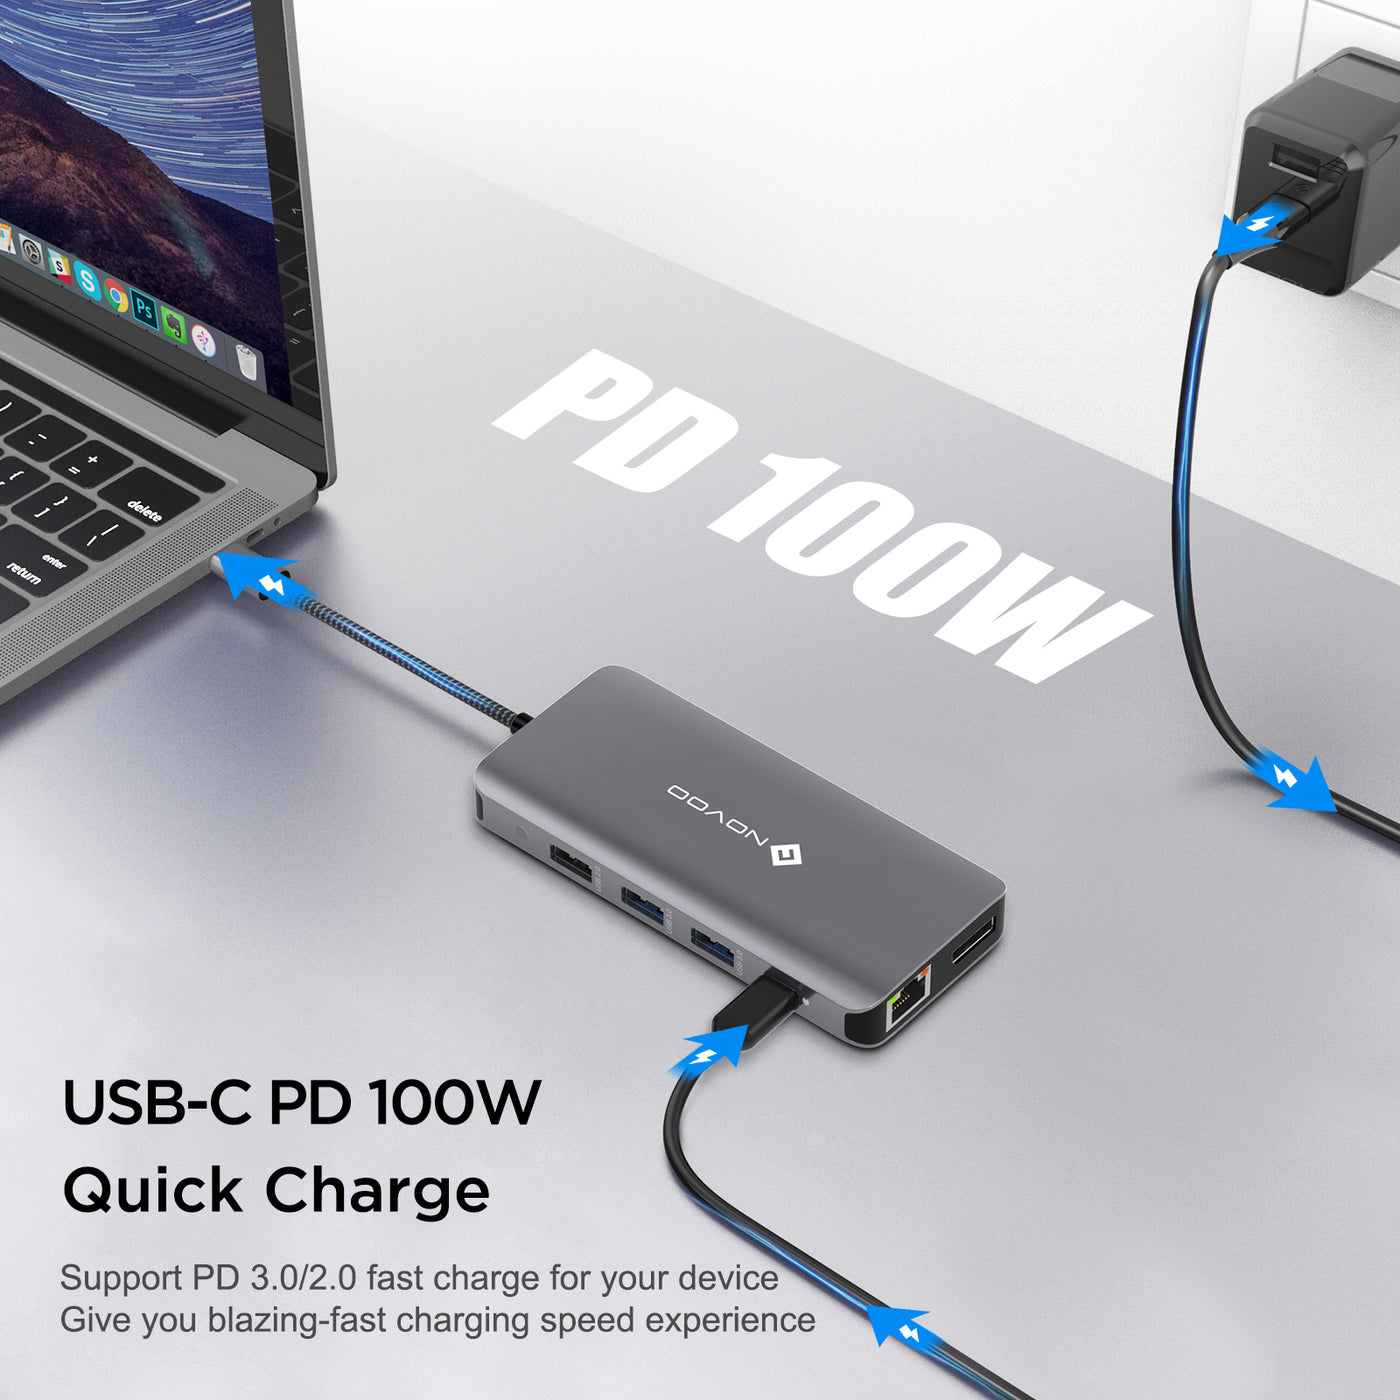 NOVOO DP 11 in 1 RM11 Pro USB C HUB - NOVOO